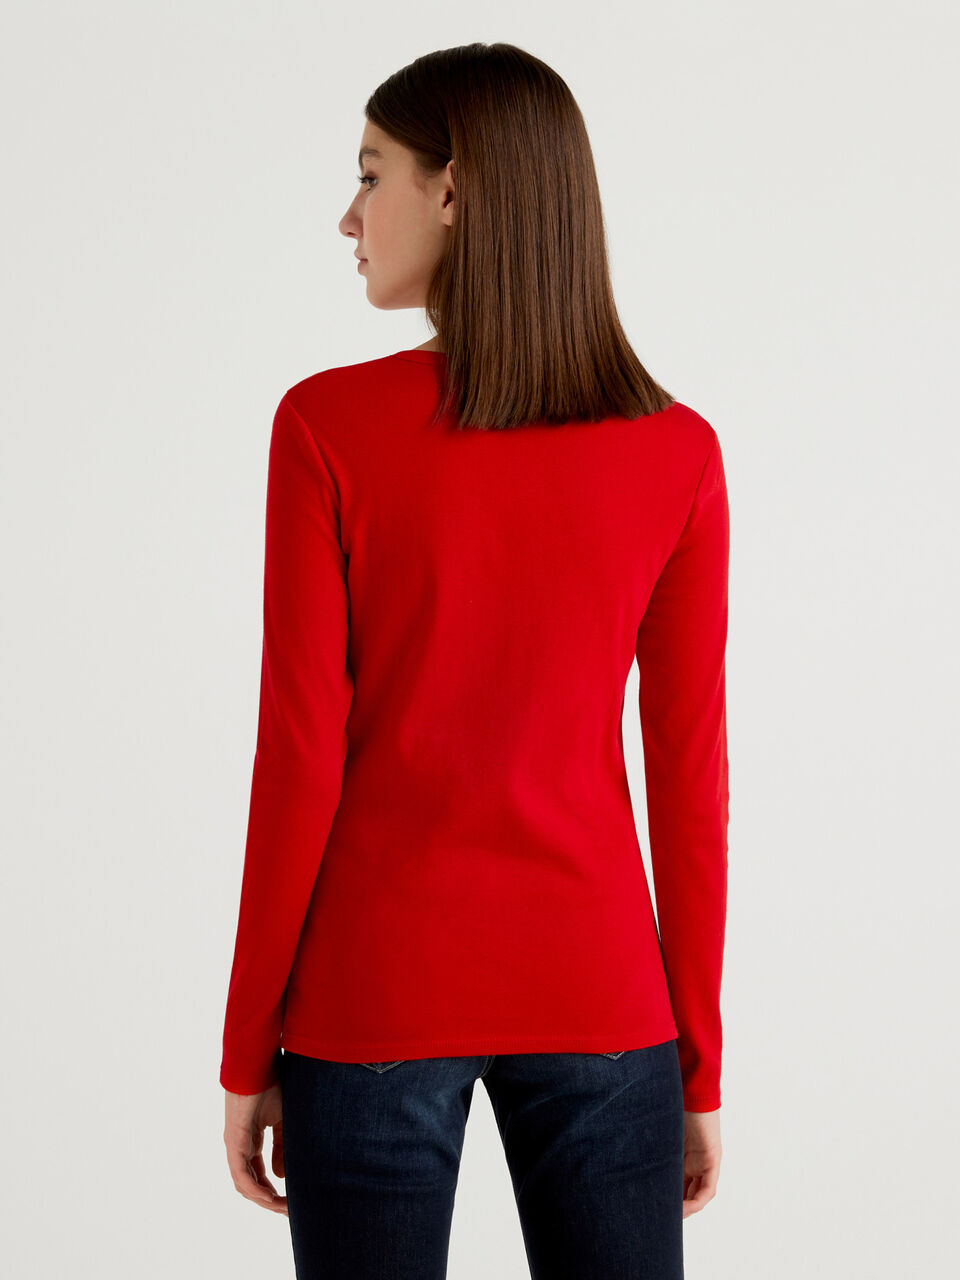 Comprar camiseta roja de manga larga con encaje online barata para mujer.